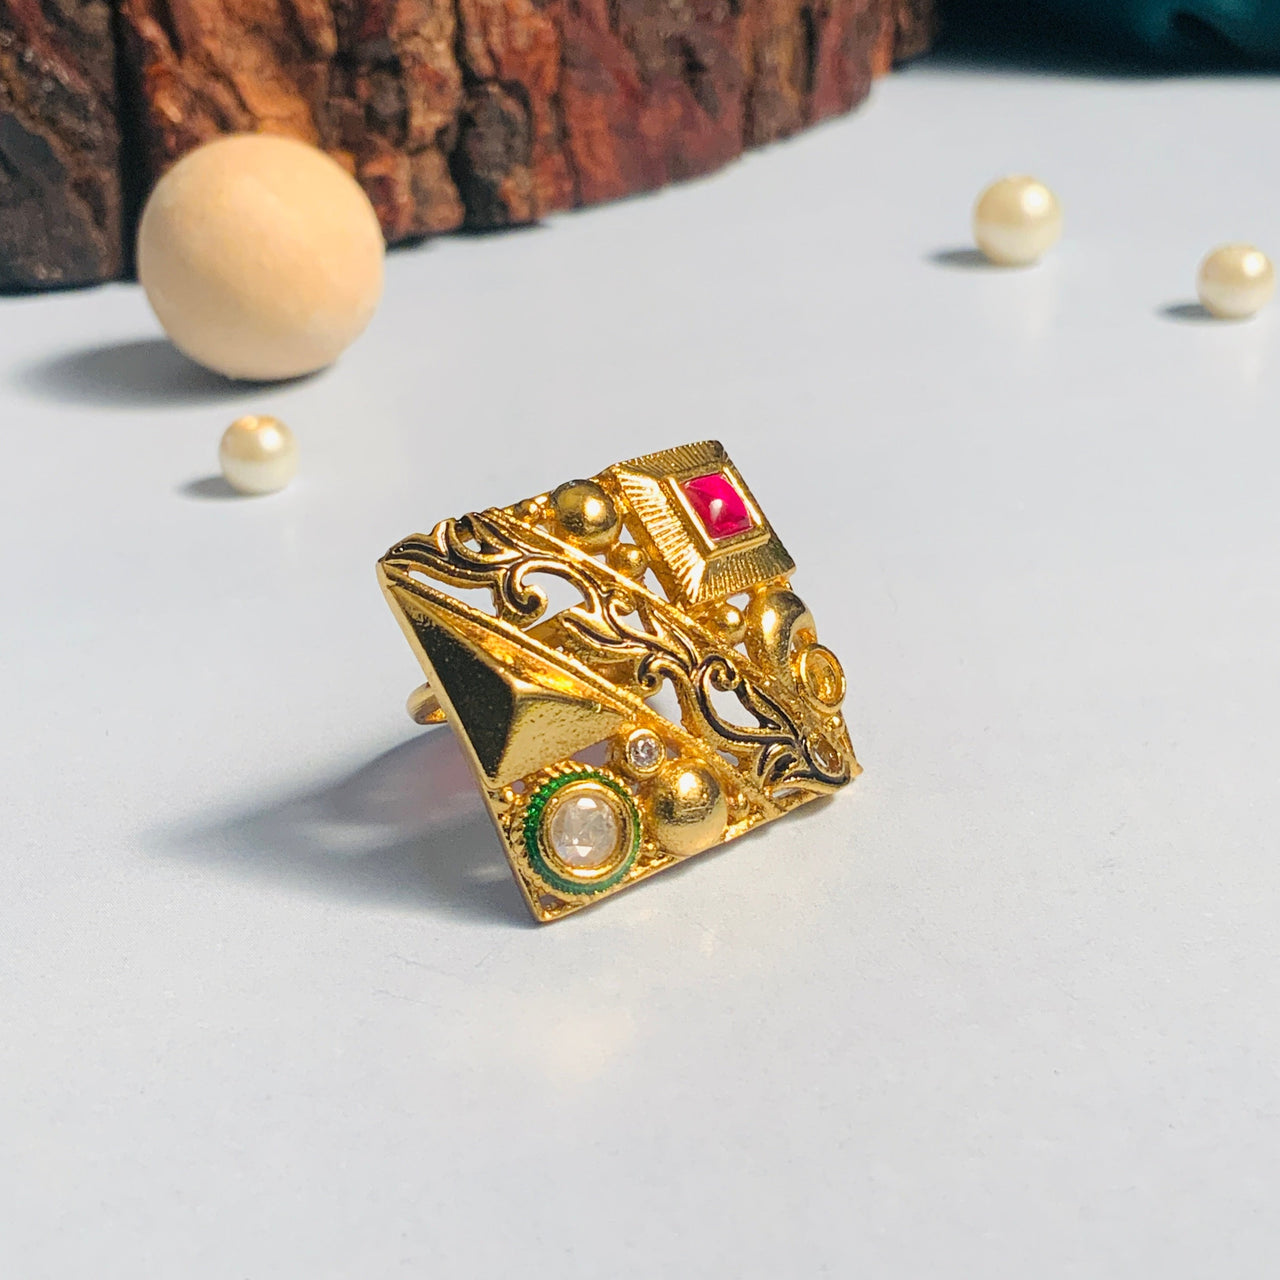 Artisanal High Quality Gold Plated Ring - Abdesignsjewellery